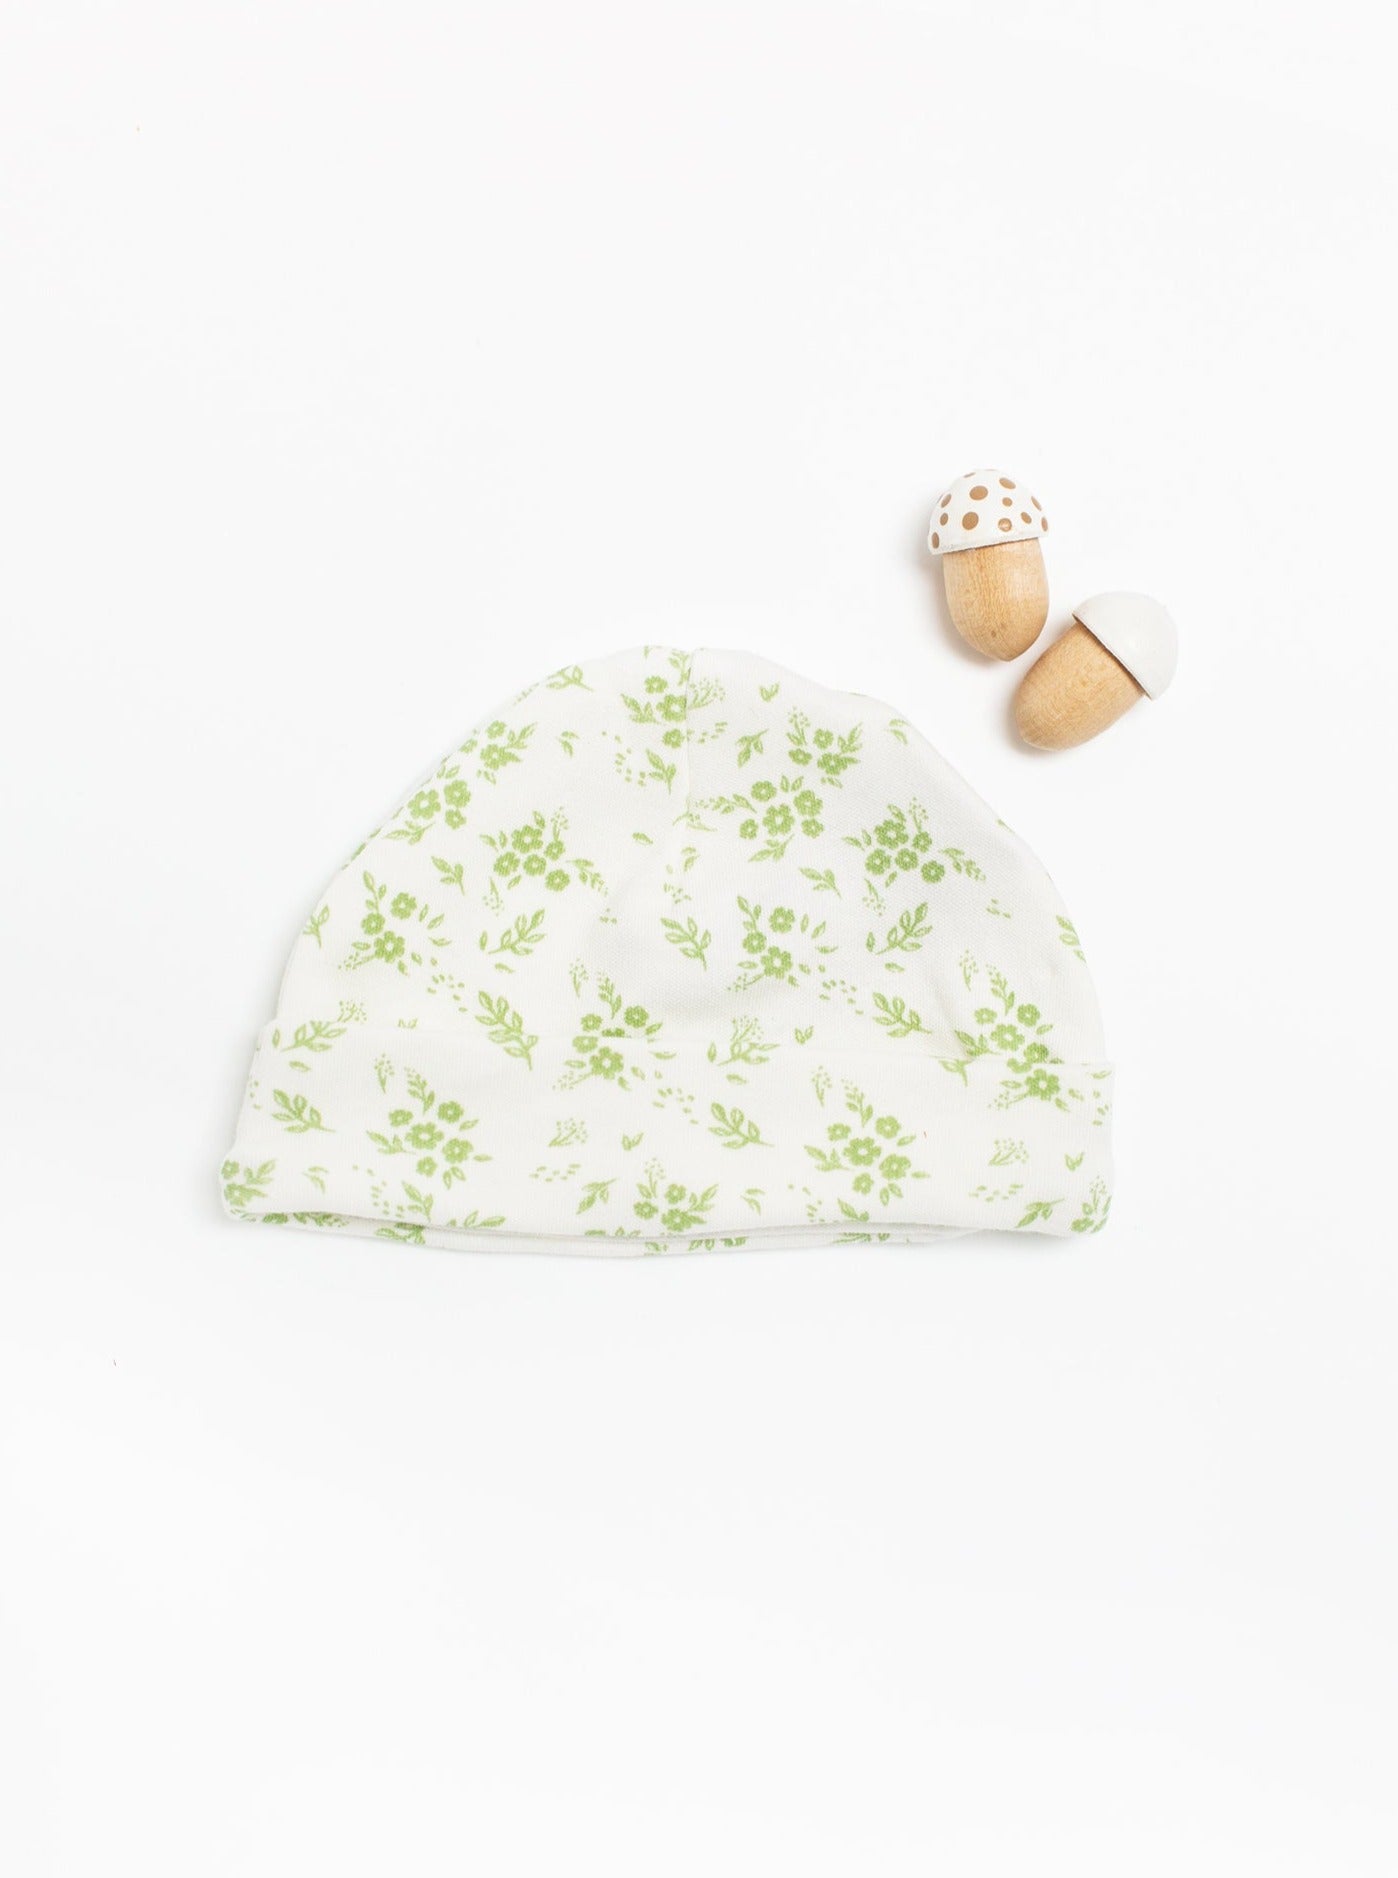 Preemie Hat, Apple Floral, Premium 100% Organic Cotton - Hat - Tiny & Small